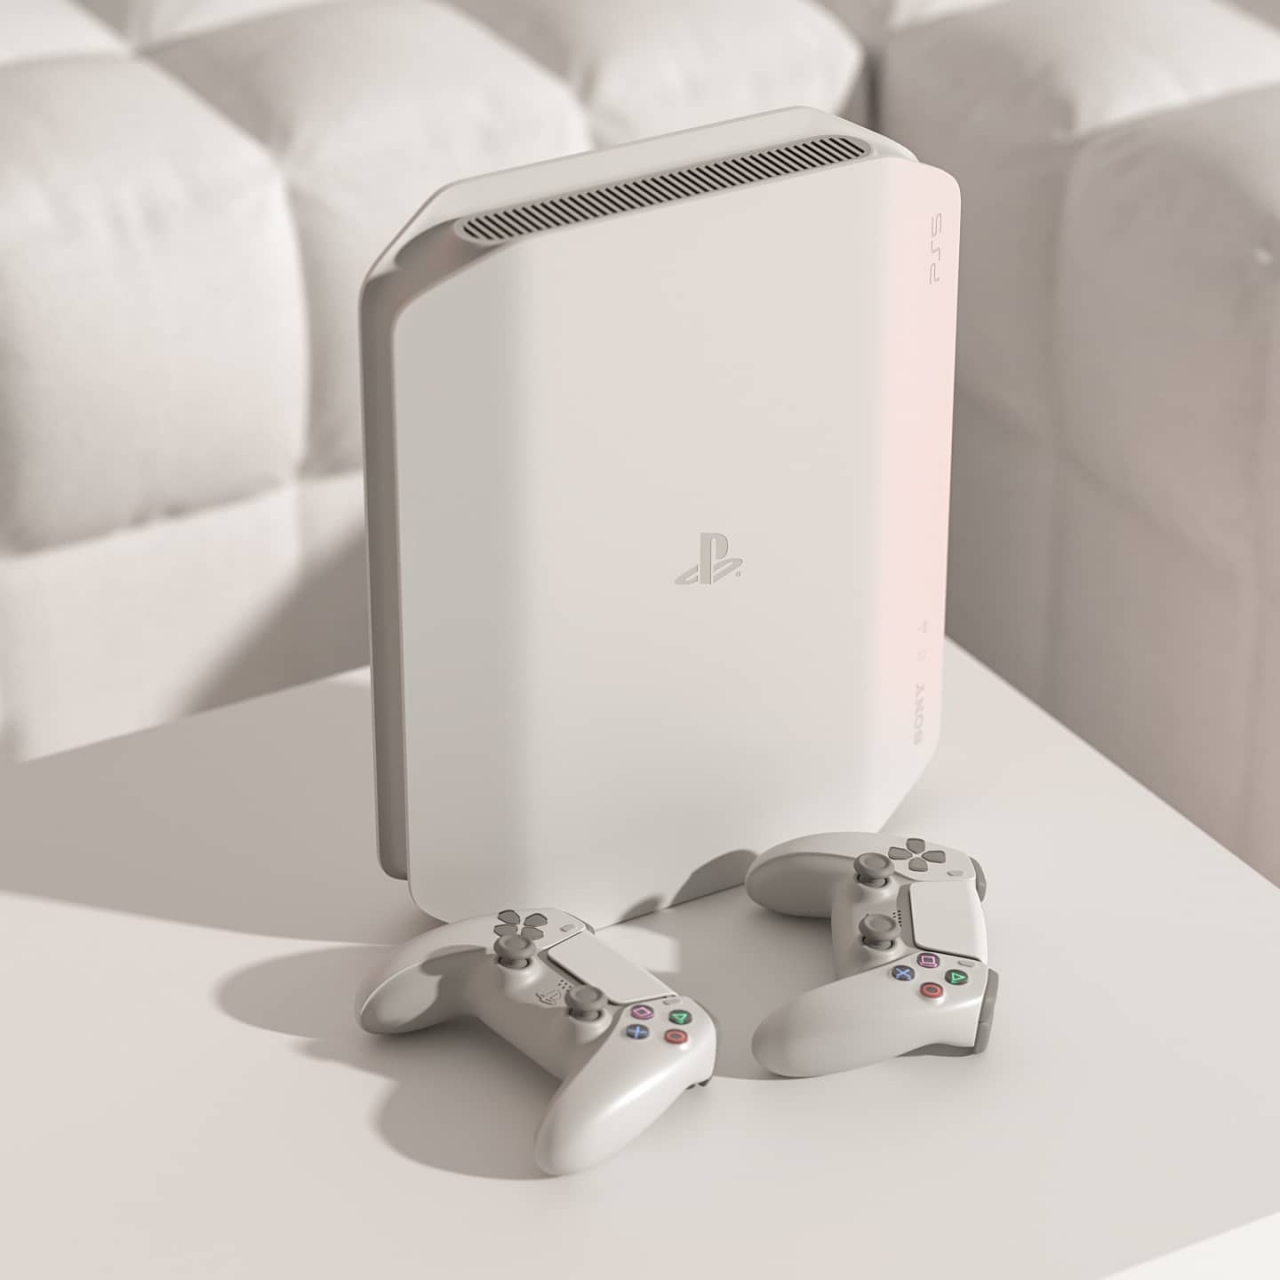 PS5 concept in white is a minimalist lover's dream – Designlab